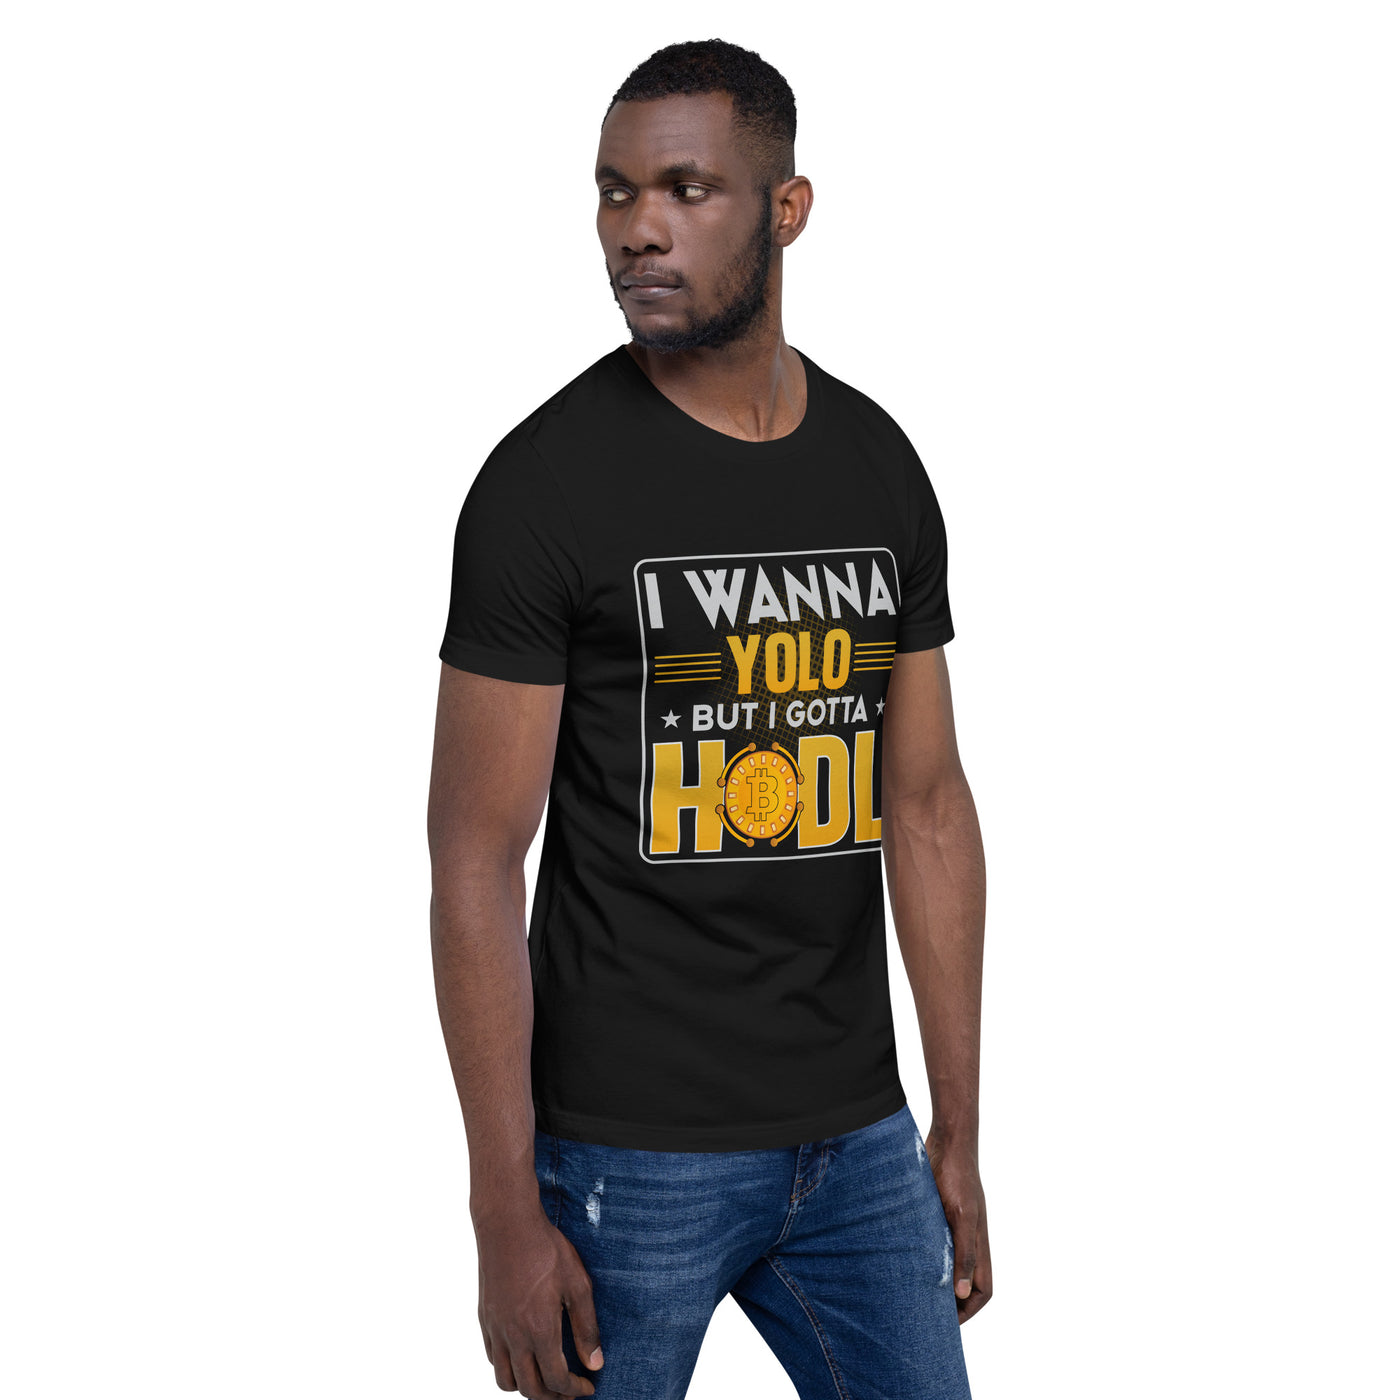 I wanna YOLO but I gotta HODL Unisex t-shirt